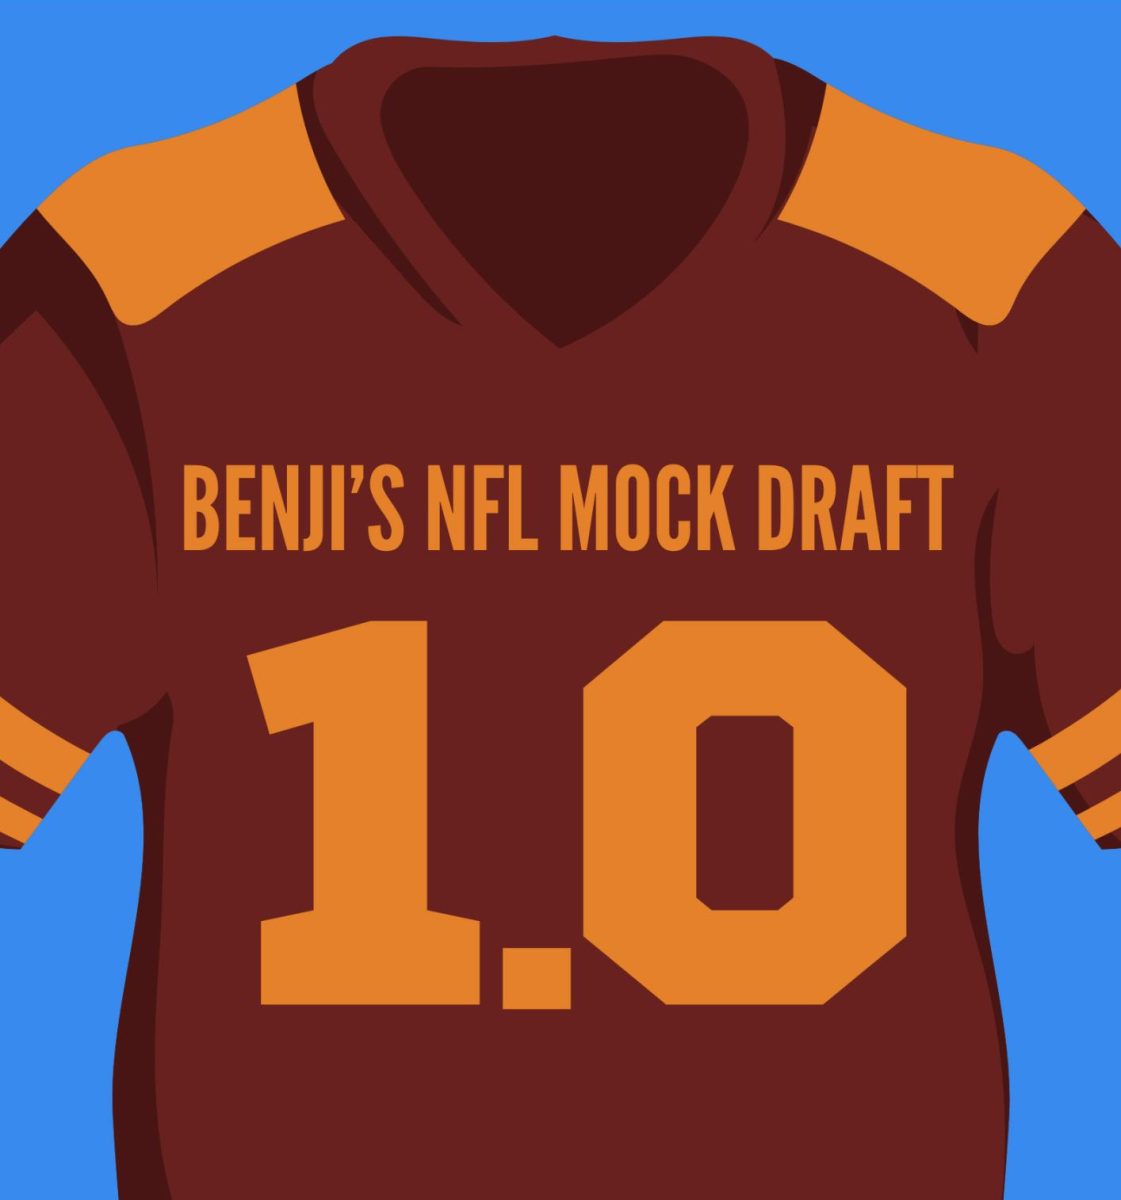 Benjis+NFL+mock+draft.+Graphic+credit%3A+Carson+Gates